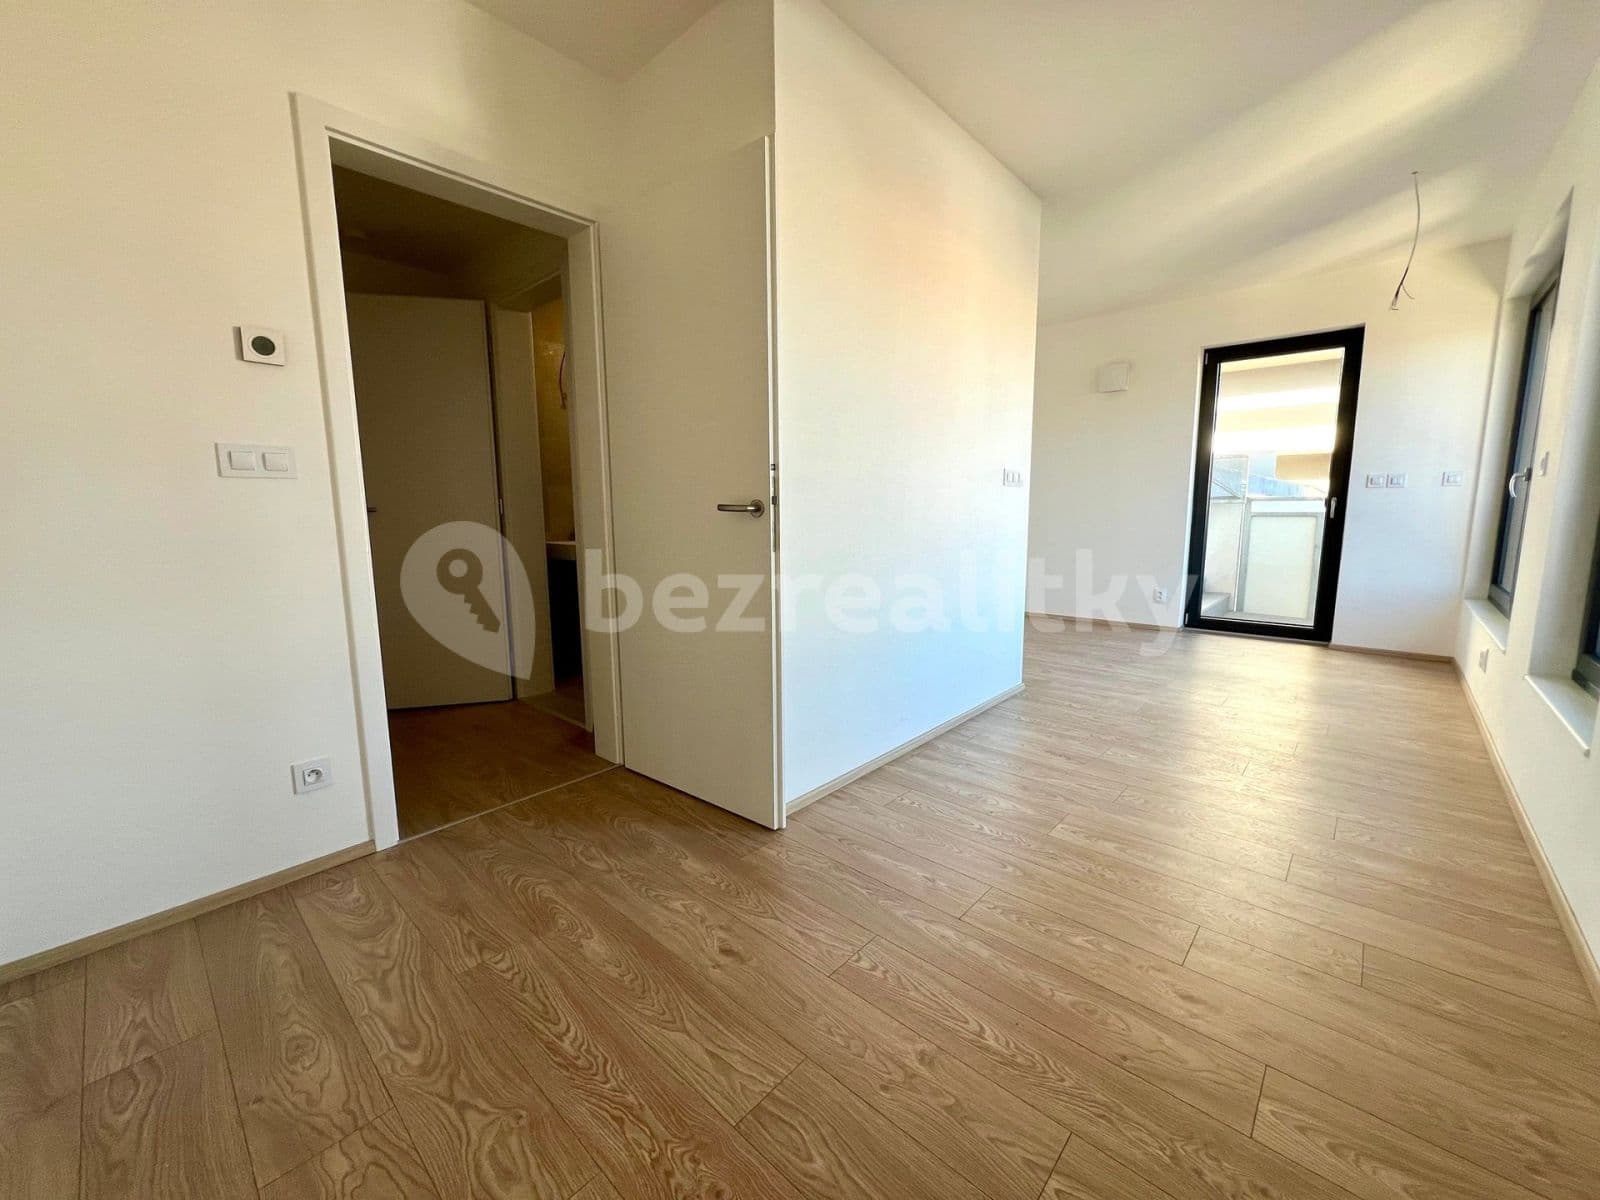 Predaj bytu 1-izbový 28 m², Bratislavská, Brno, Jihomoravský kraj